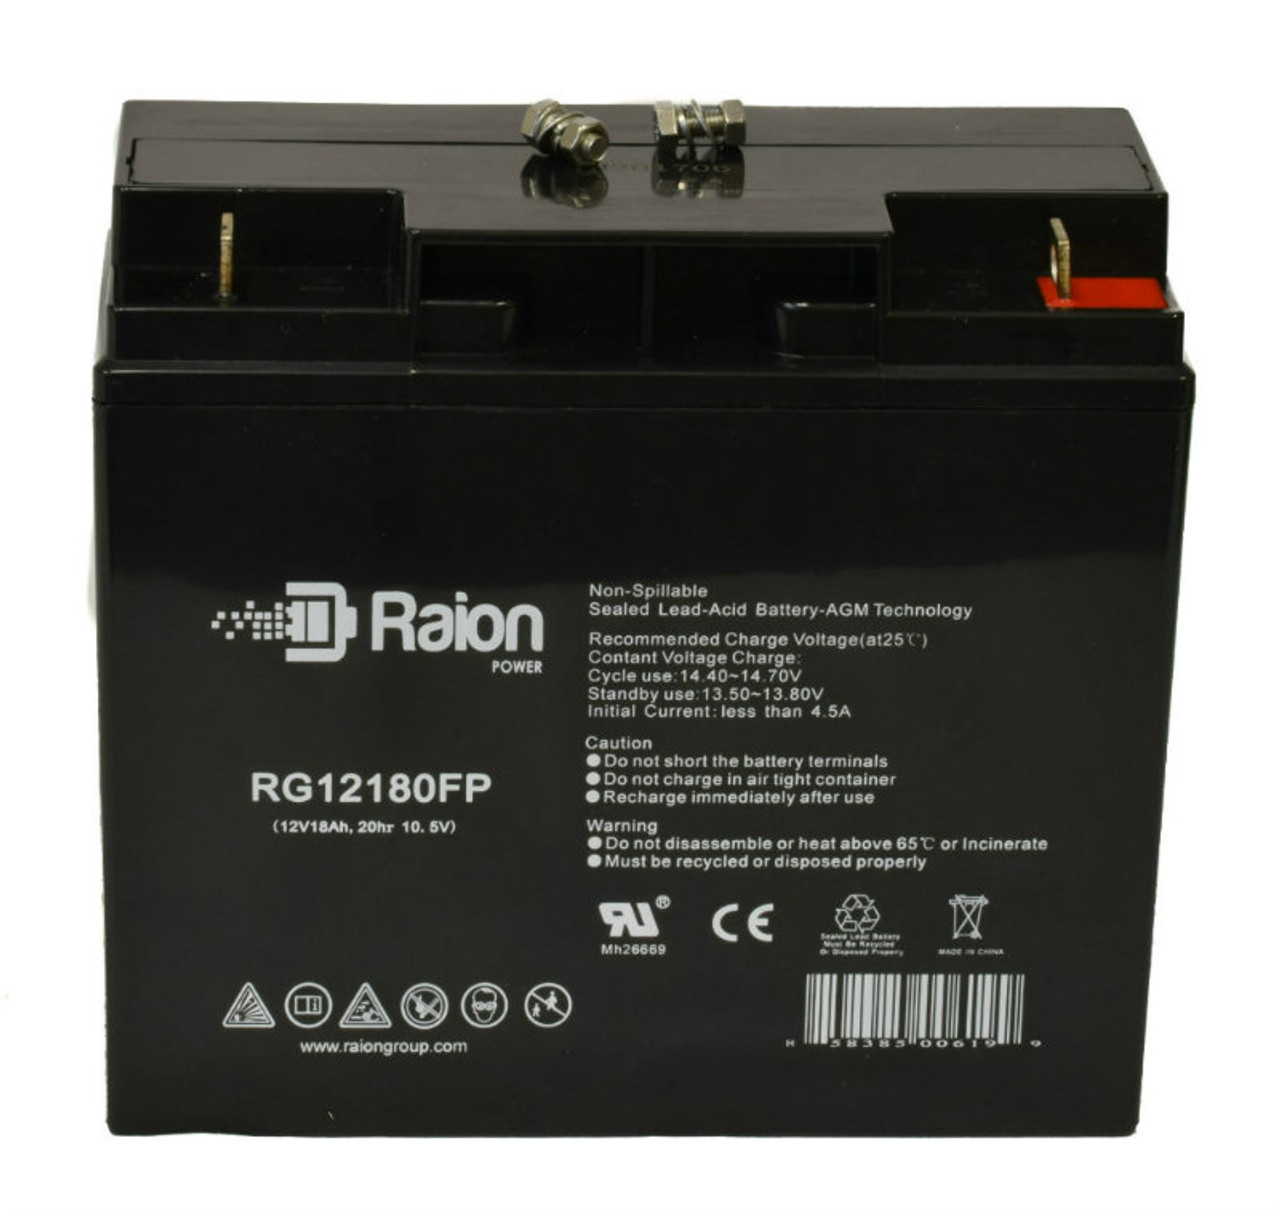 Raion Power RG12180FP 12V 18Ah Lead Acid Battery for Power Patrol SLA0156